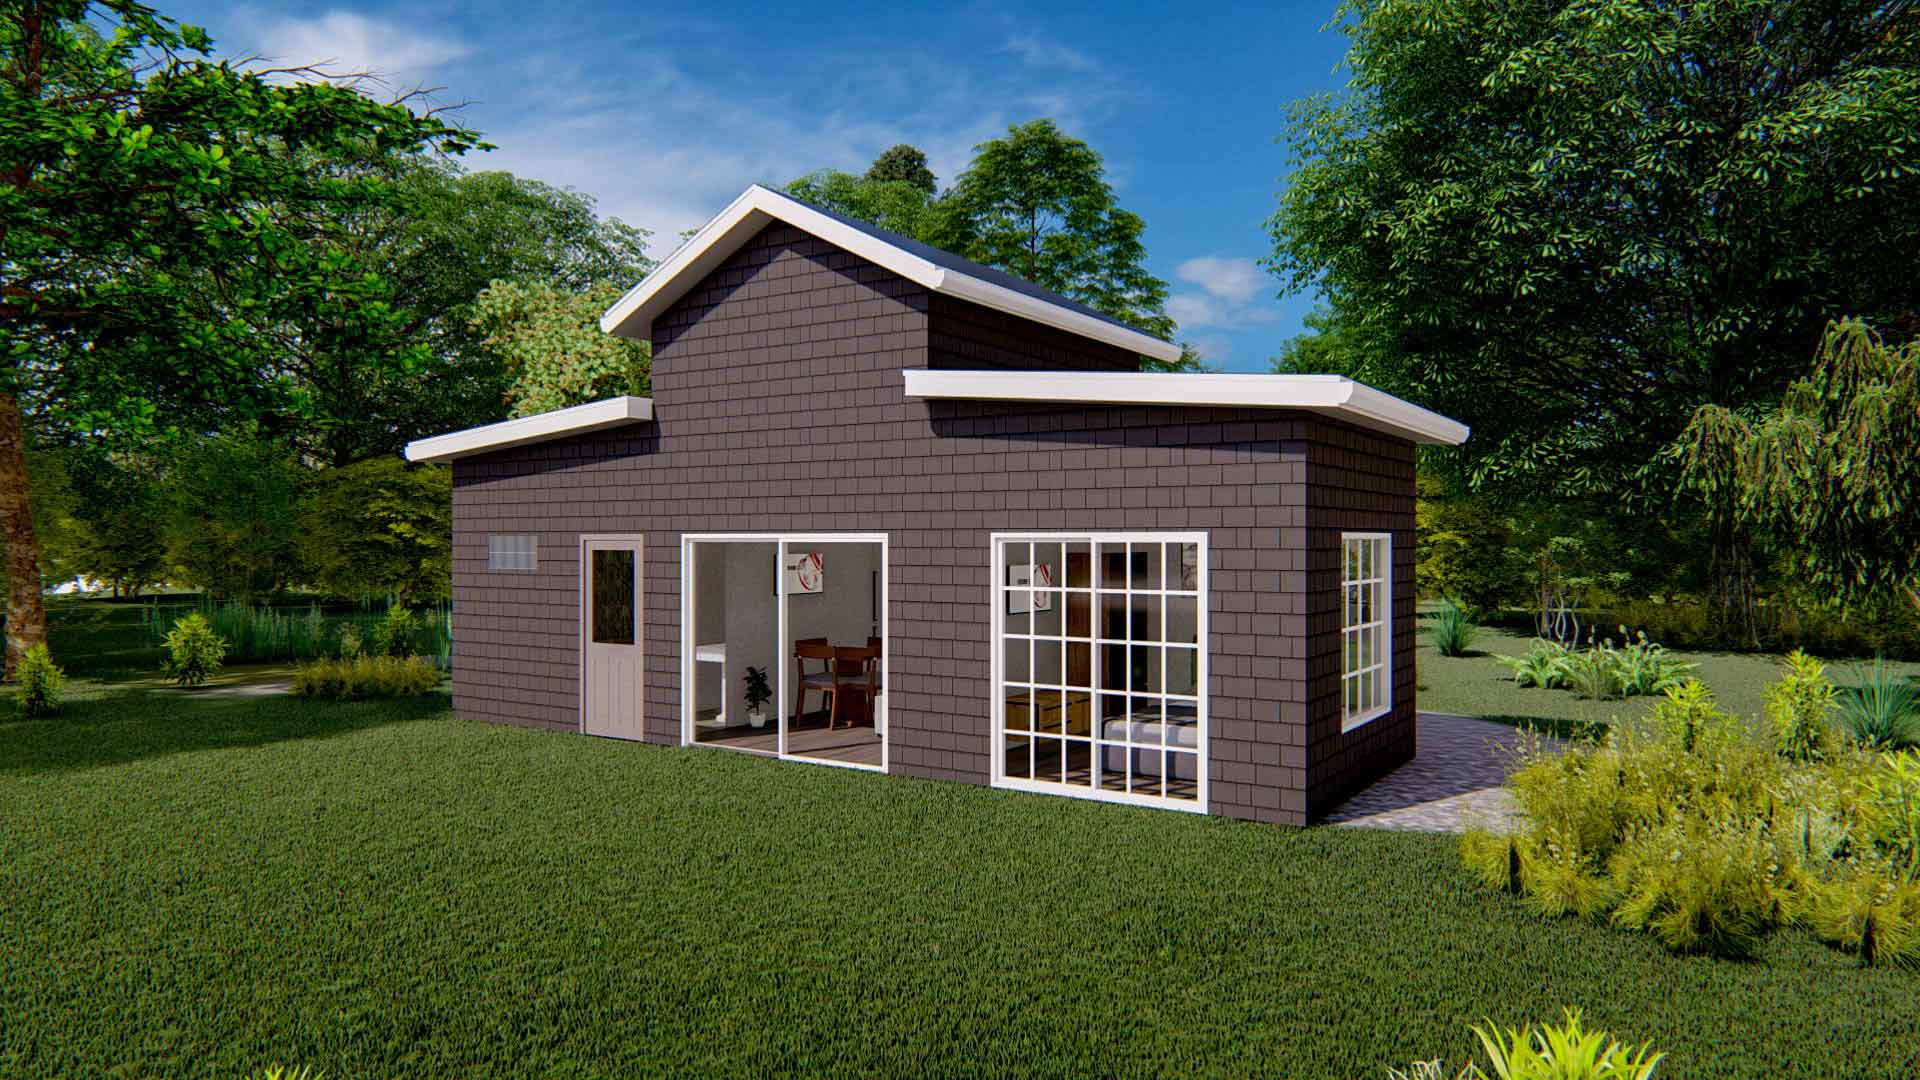 The Haven 1 Bedroom 366 sq. ft. Tiny Home DIY Steel Frame Building Kit,  ADU, Cabin, Guest house, Backyard rental - PLUS 1 Homes